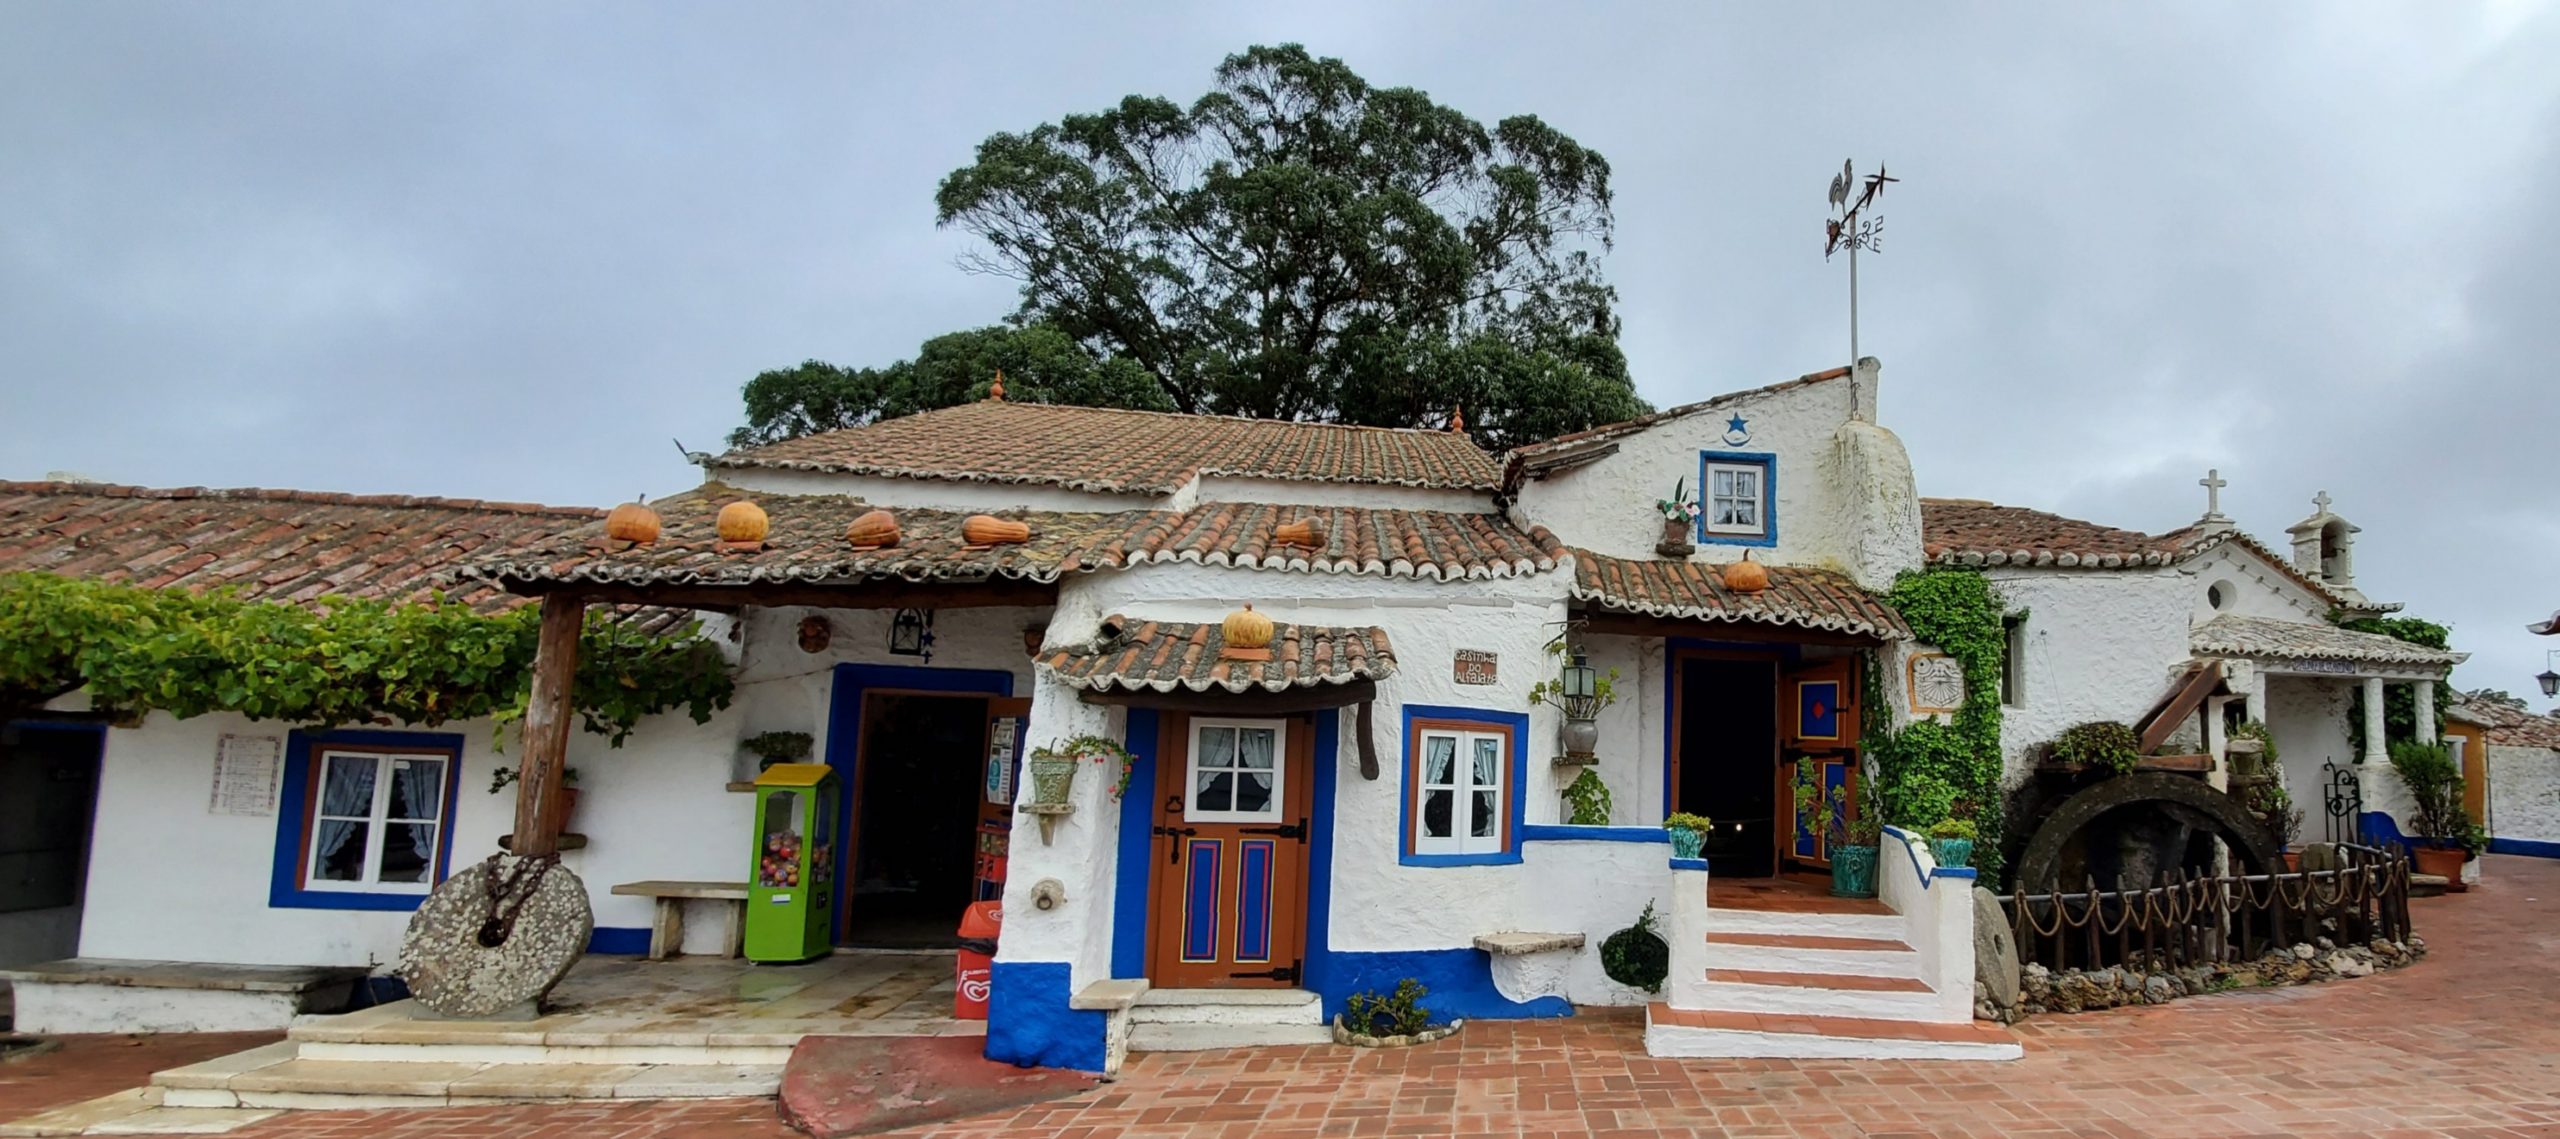 Miniature Village in Mafra – Aldeia Típica